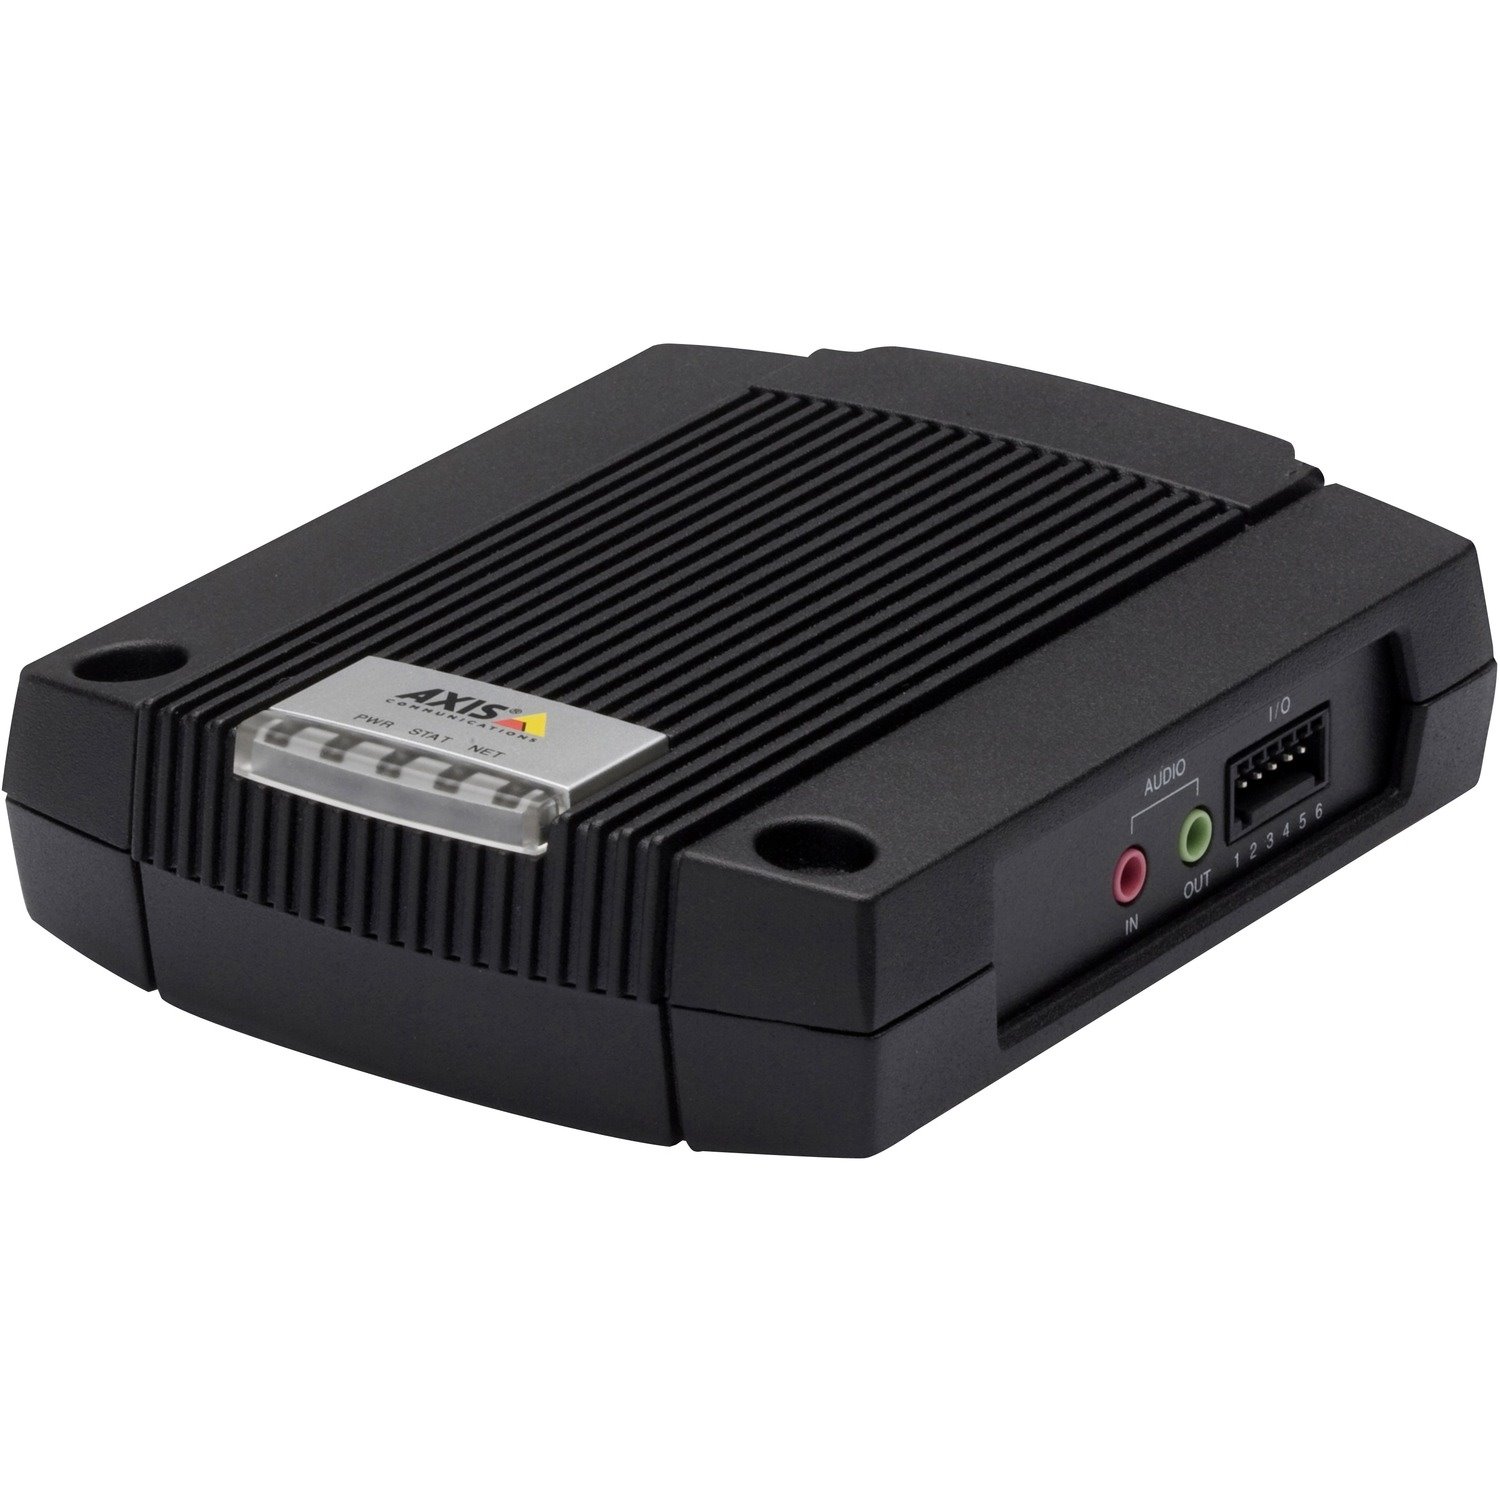 AXIS Q7401 Video Encoder - External